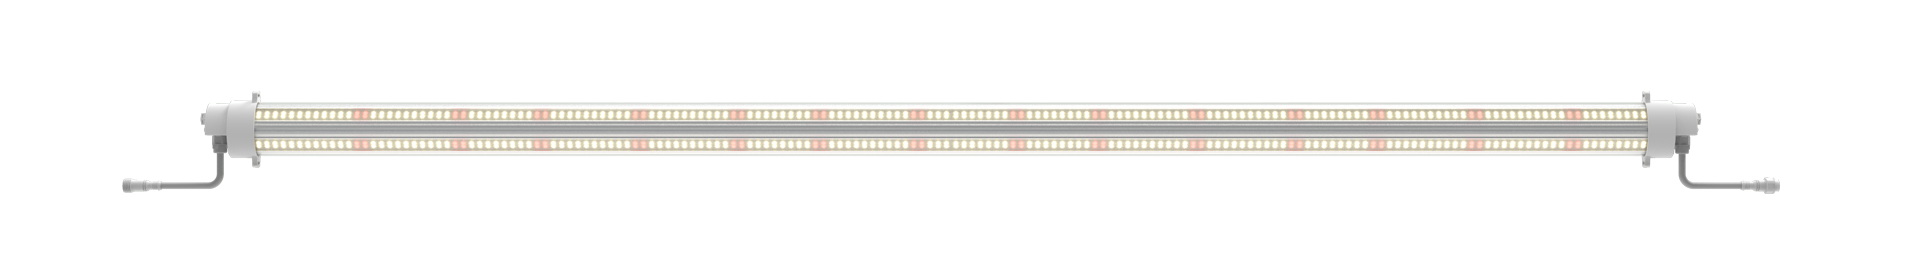 Advantages of Inter-Light Plus Thin LED Grow Light